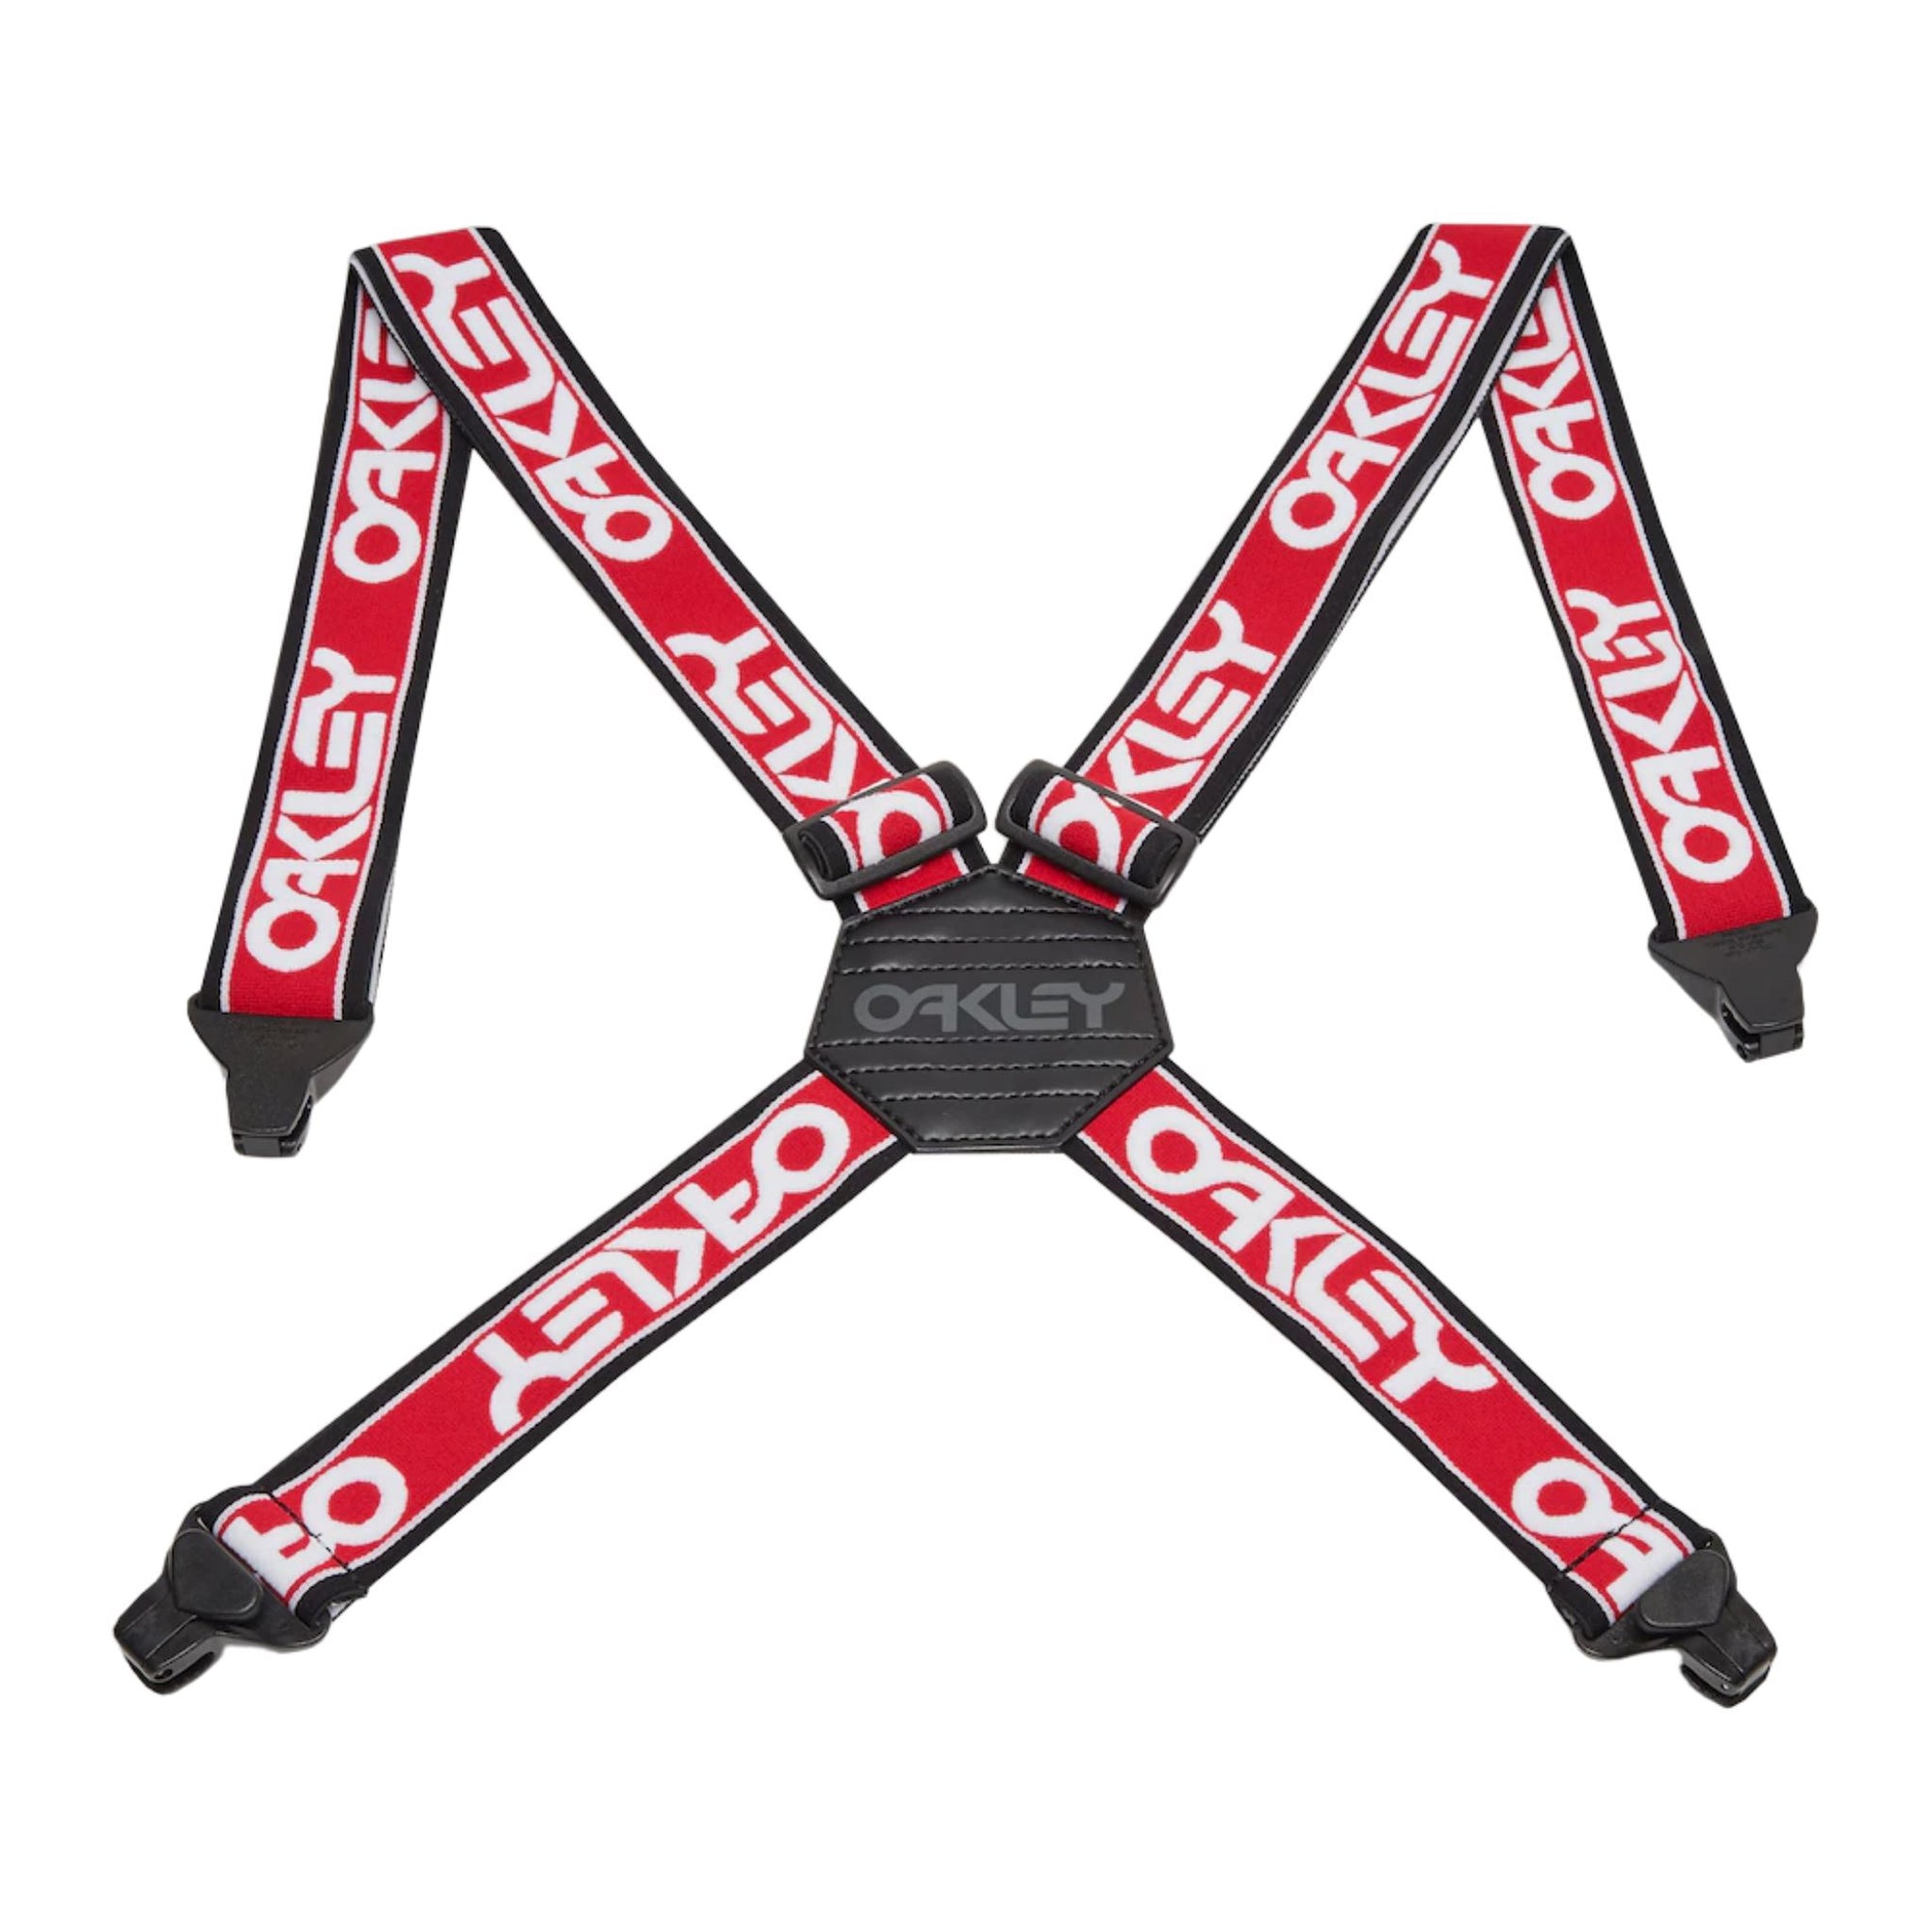 Oakley Factory Suspenders - Red Line/White Accessories Oakley OSFA 